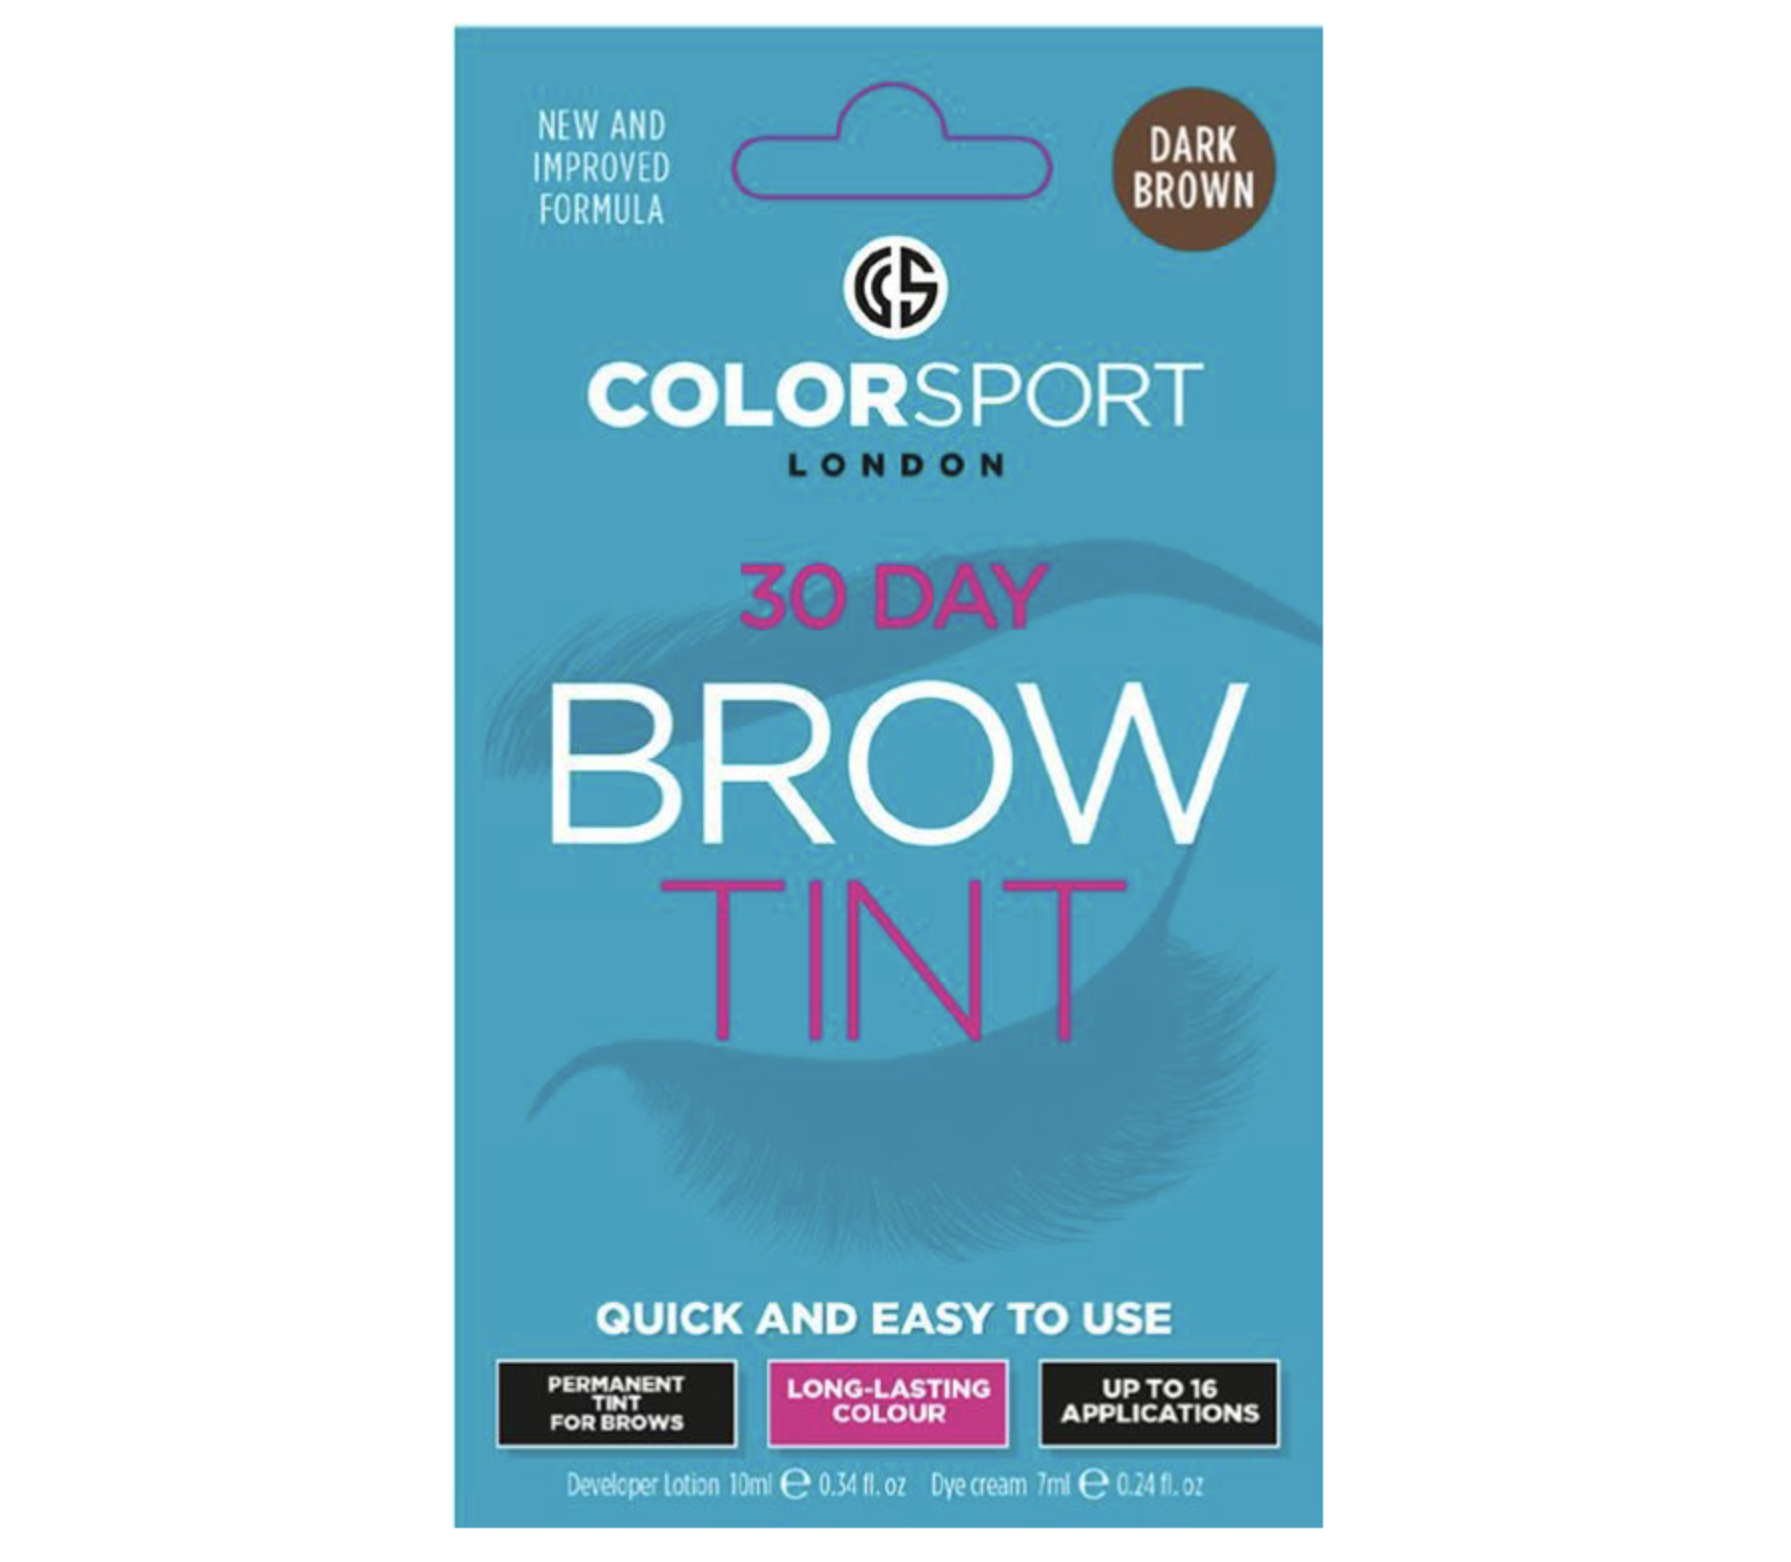 Schwarzkopf Brow Tint Professional formula Eyebrow Dye Tinting Kit All  colours